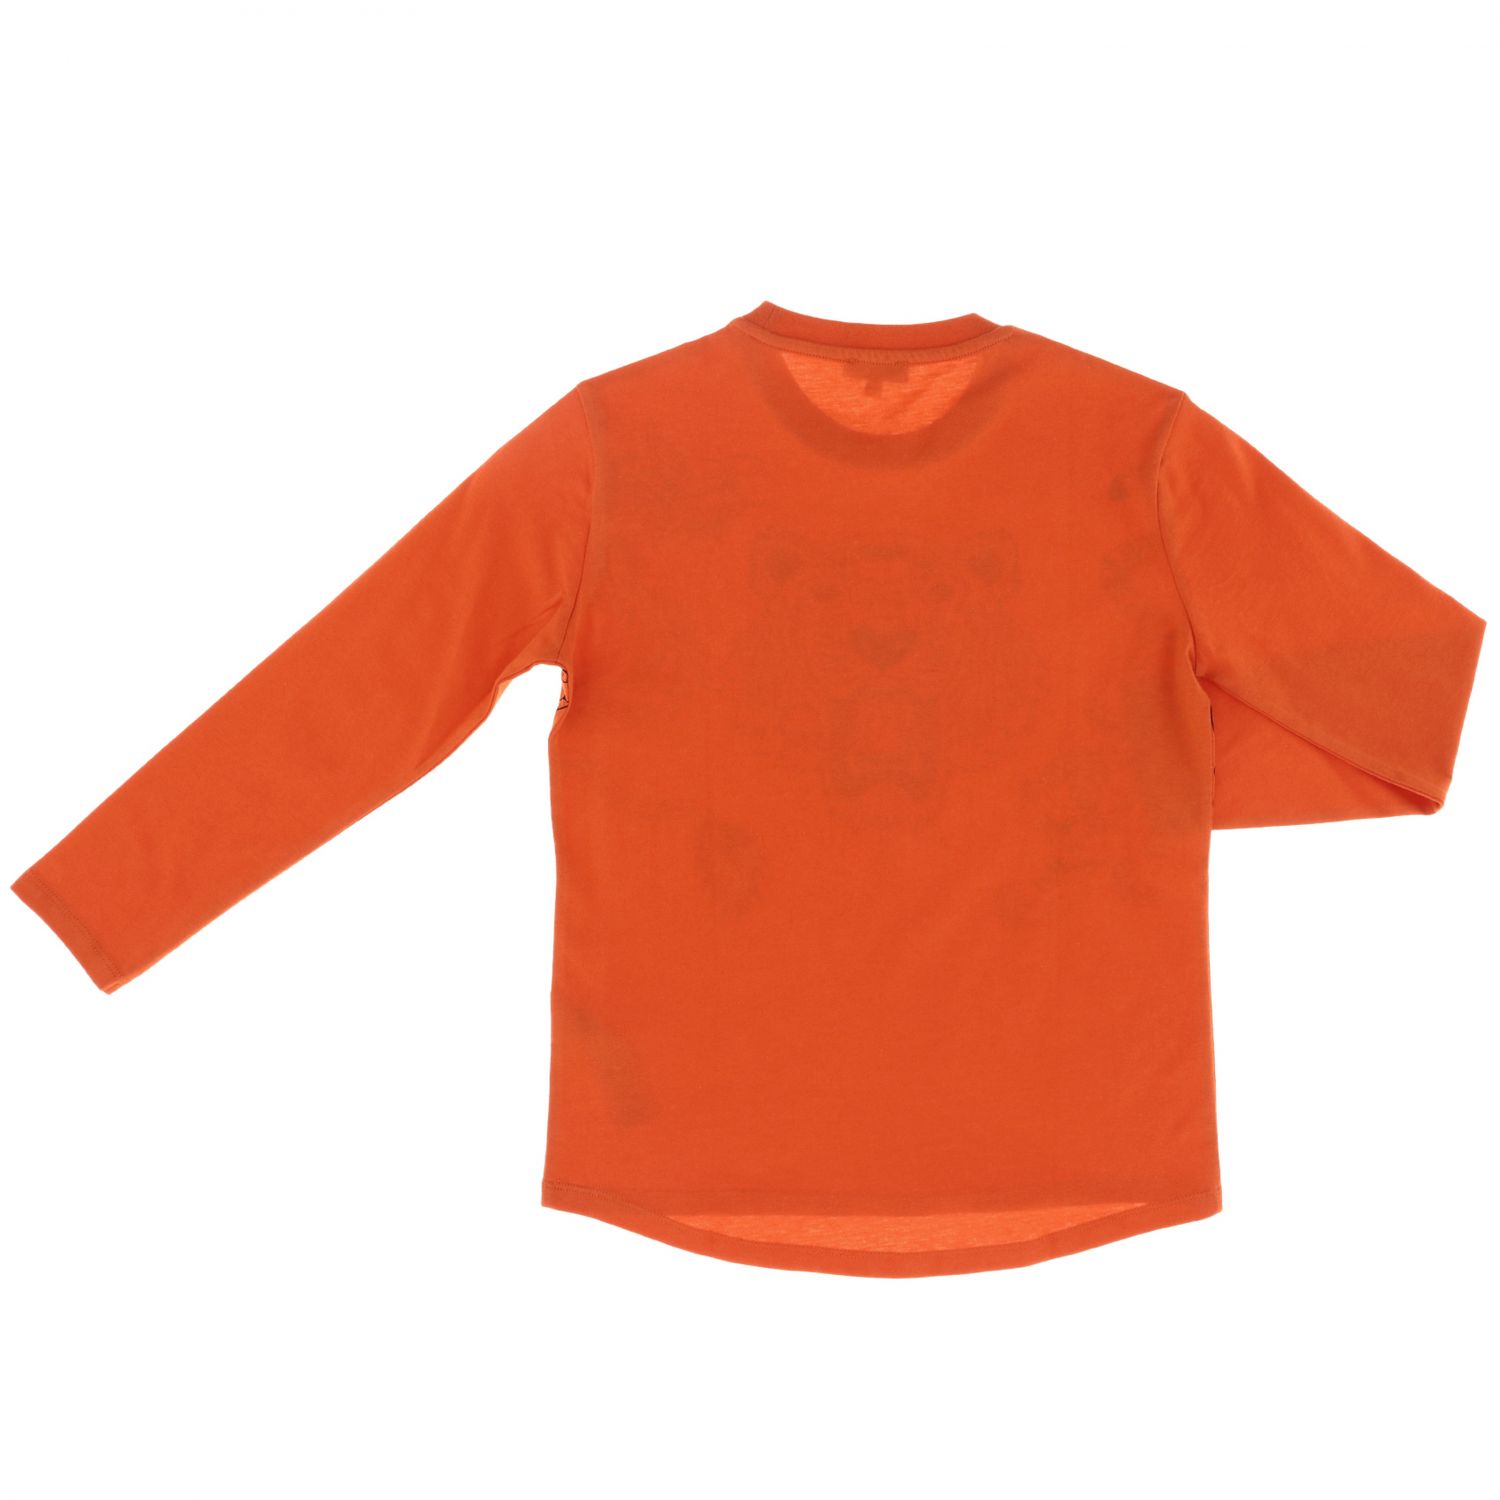 kenzo t shirt orange